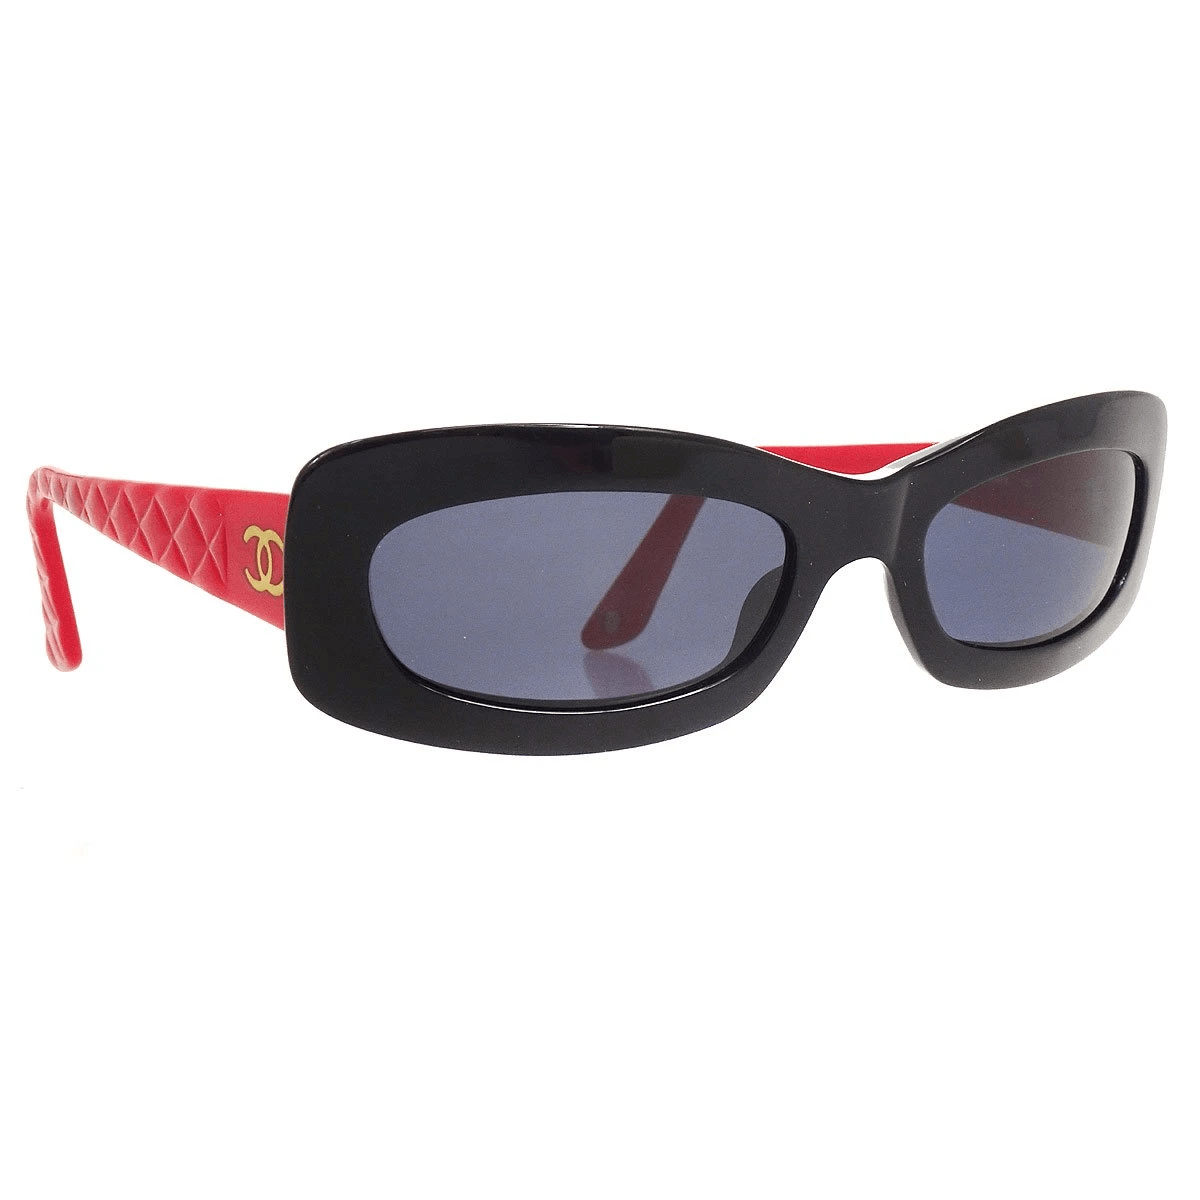 CHANEL 5006 Sunglasses VINTAGE Rare Very Good Condition